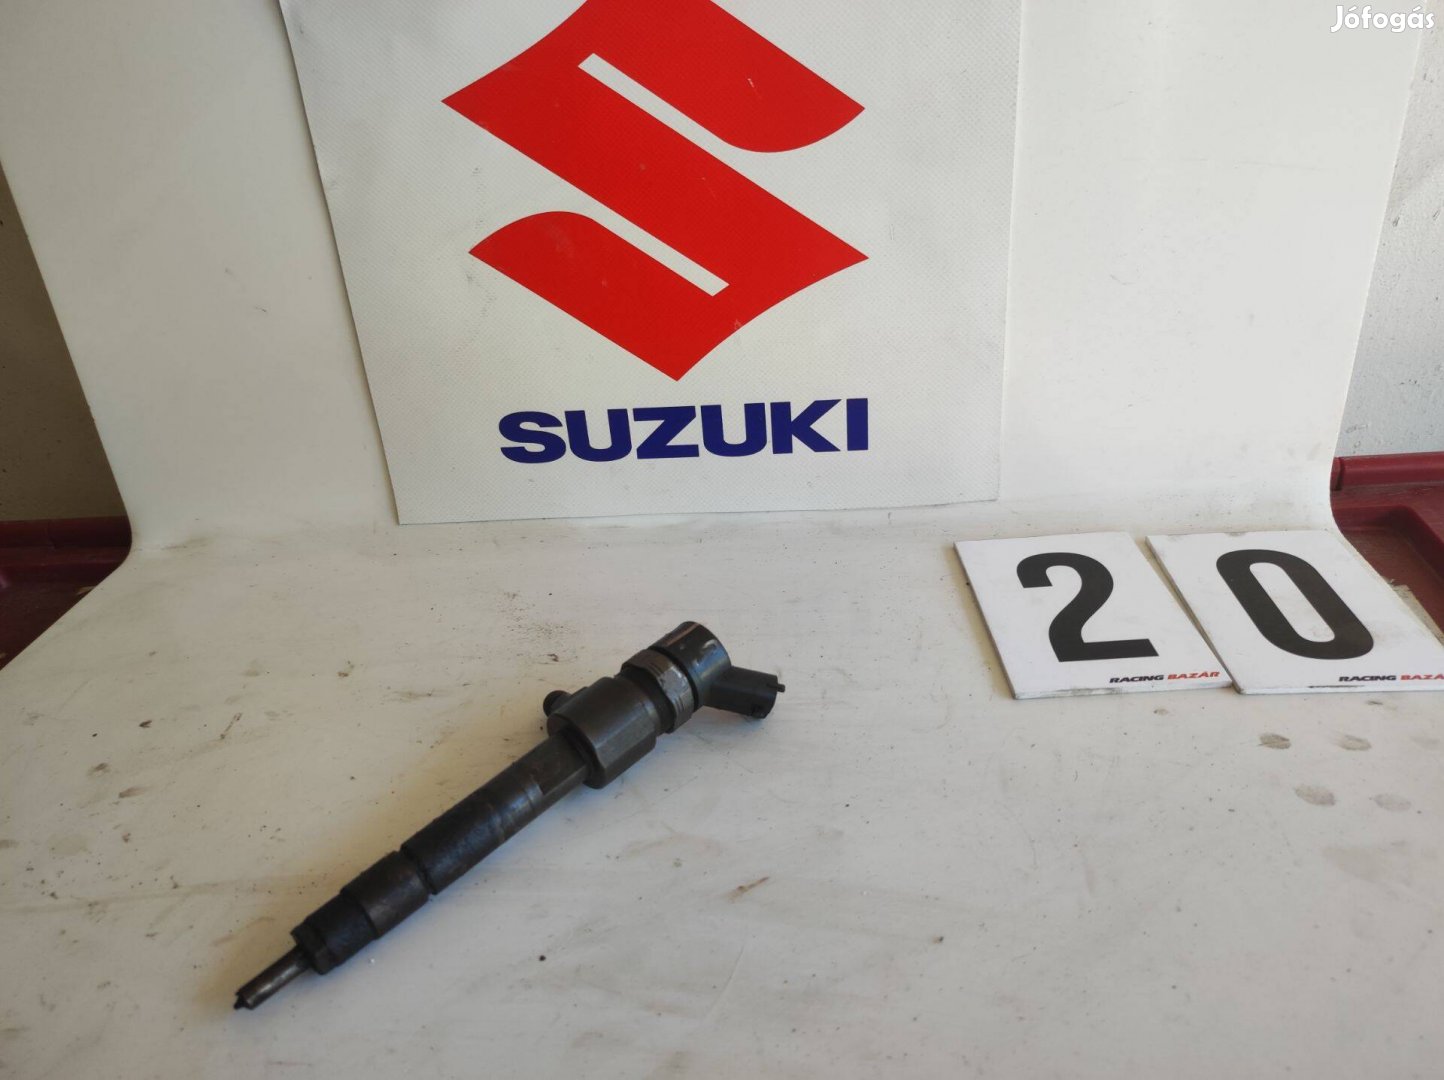 Suzuki ignis ddis dizel porlasztó